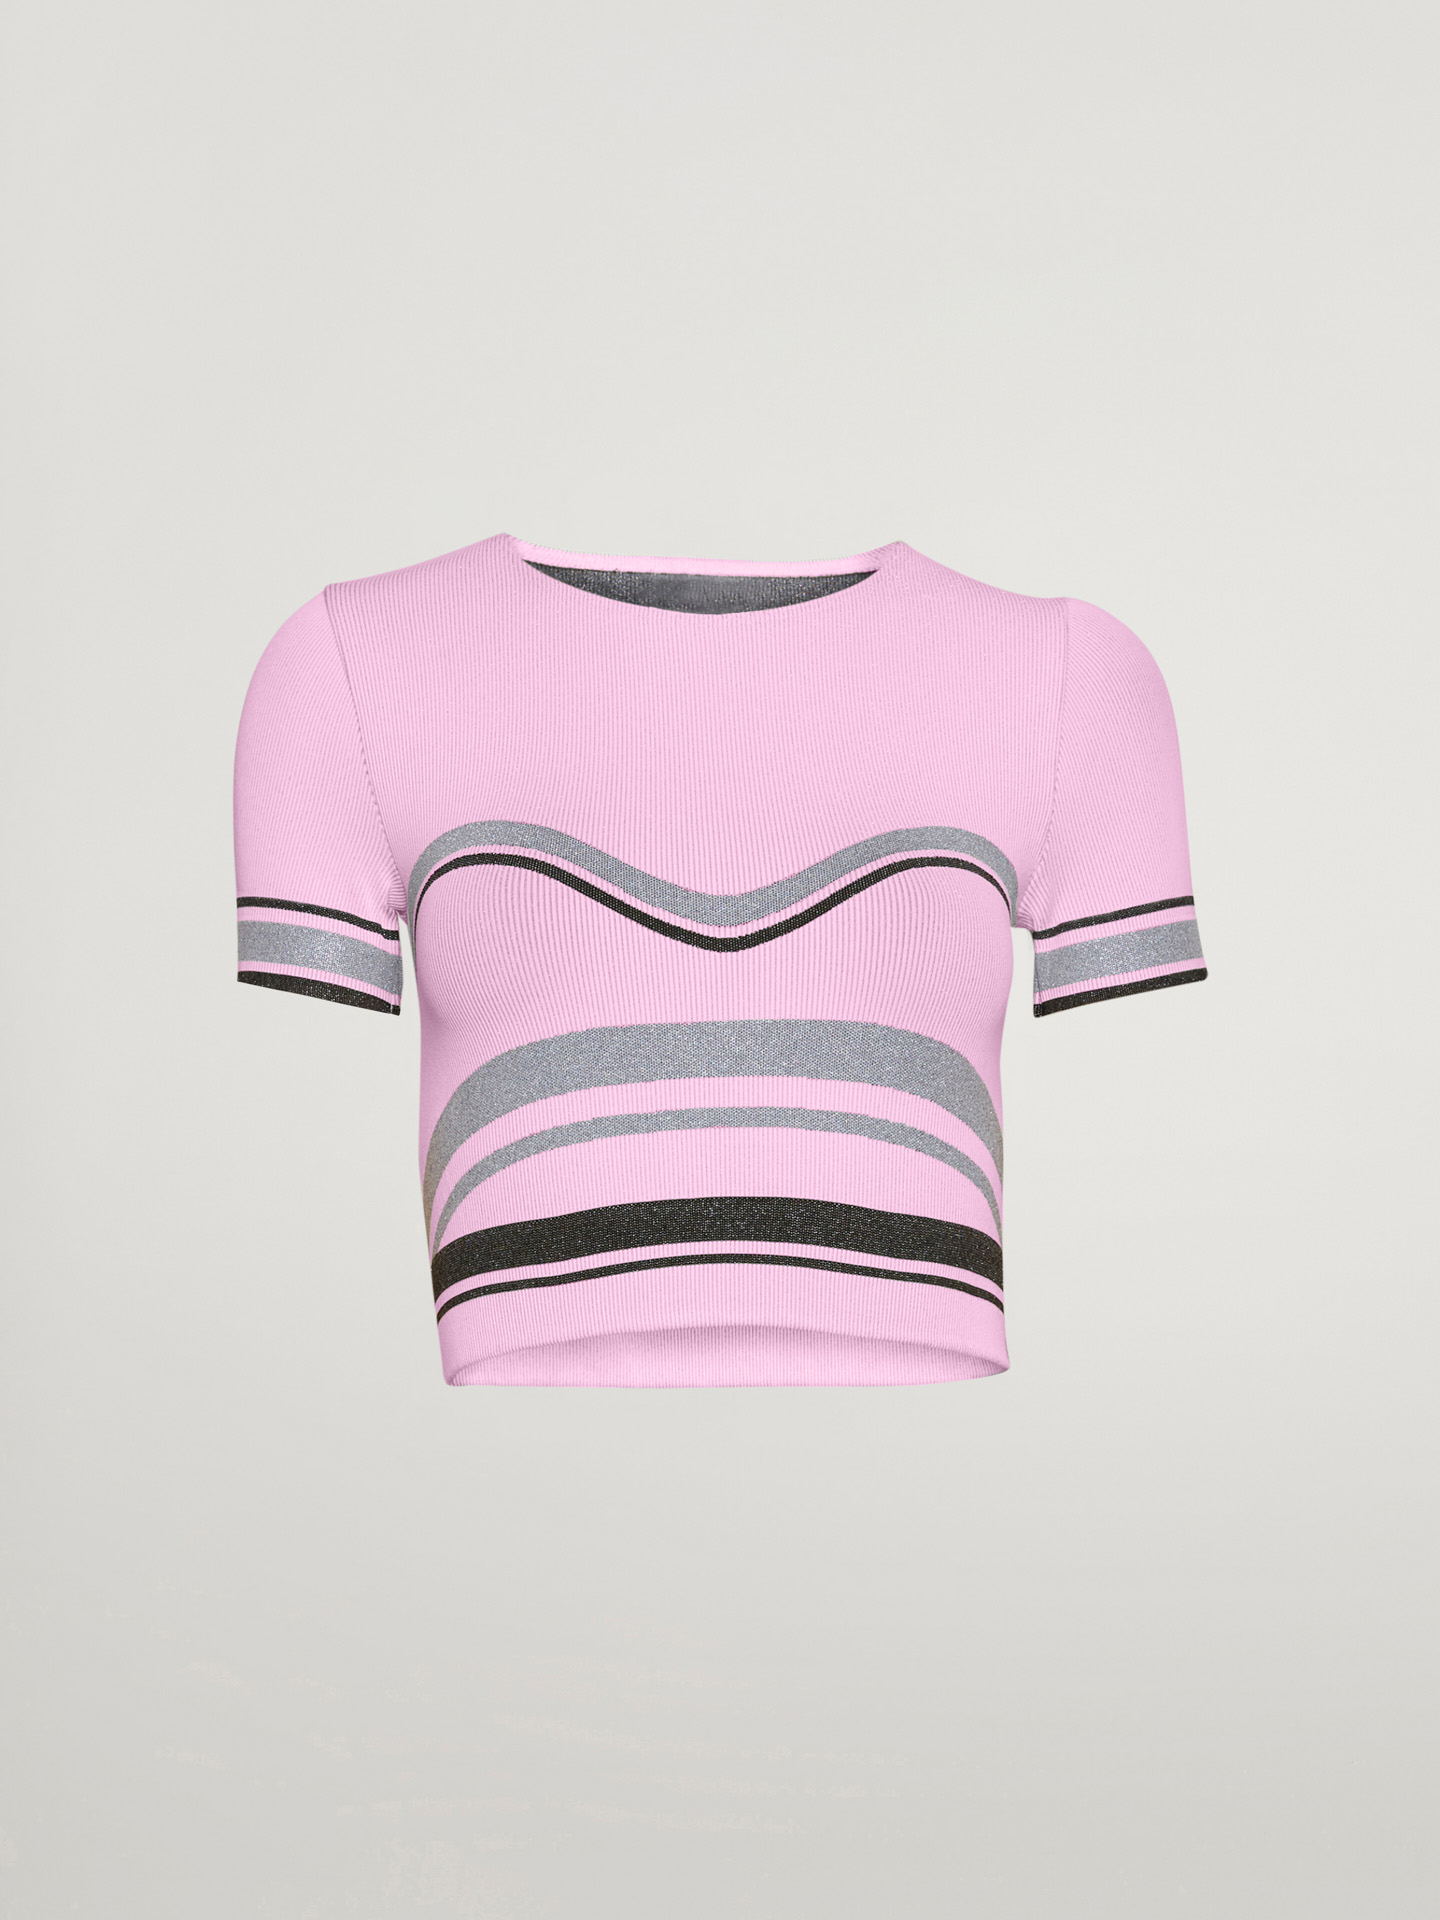 Wolford - Shaping Stripes Crop Top, Frau, prisma pink/silver/black, Größe: S von Wolford